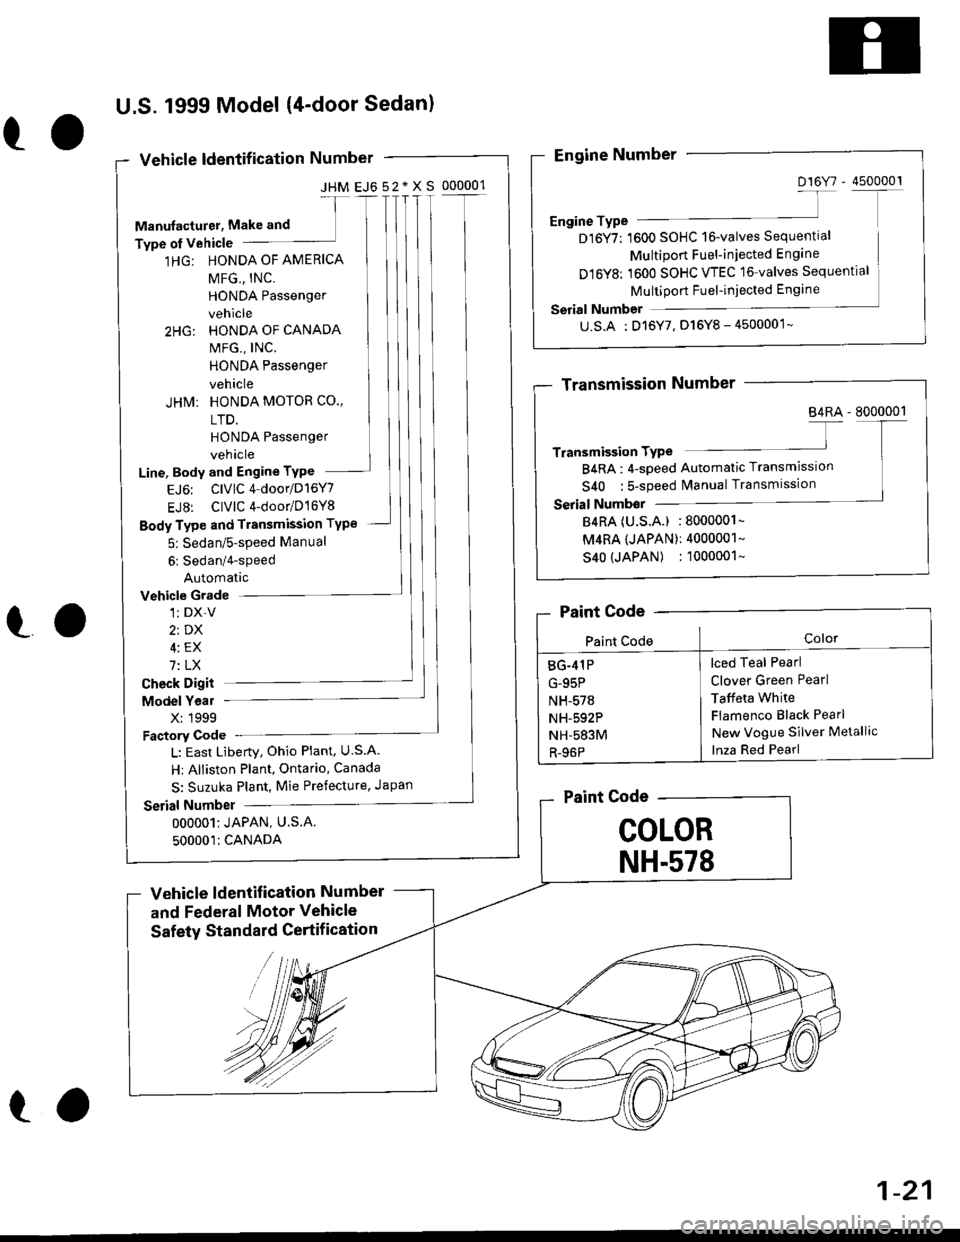 HONDA CIVIC 1999 6.G Workshop Manual ro
U.S. 1999 Model (4door Sedan)
Vehicle ldentif ication Number
JHM EJ652*XS 000001-f
Manufacturel, Make and
Type ol vehicle
1HG: HONDA OF AMERICA
Vehicle Gradel: DX-V
2t DX
4: EX
7: LX
HONDA Passen